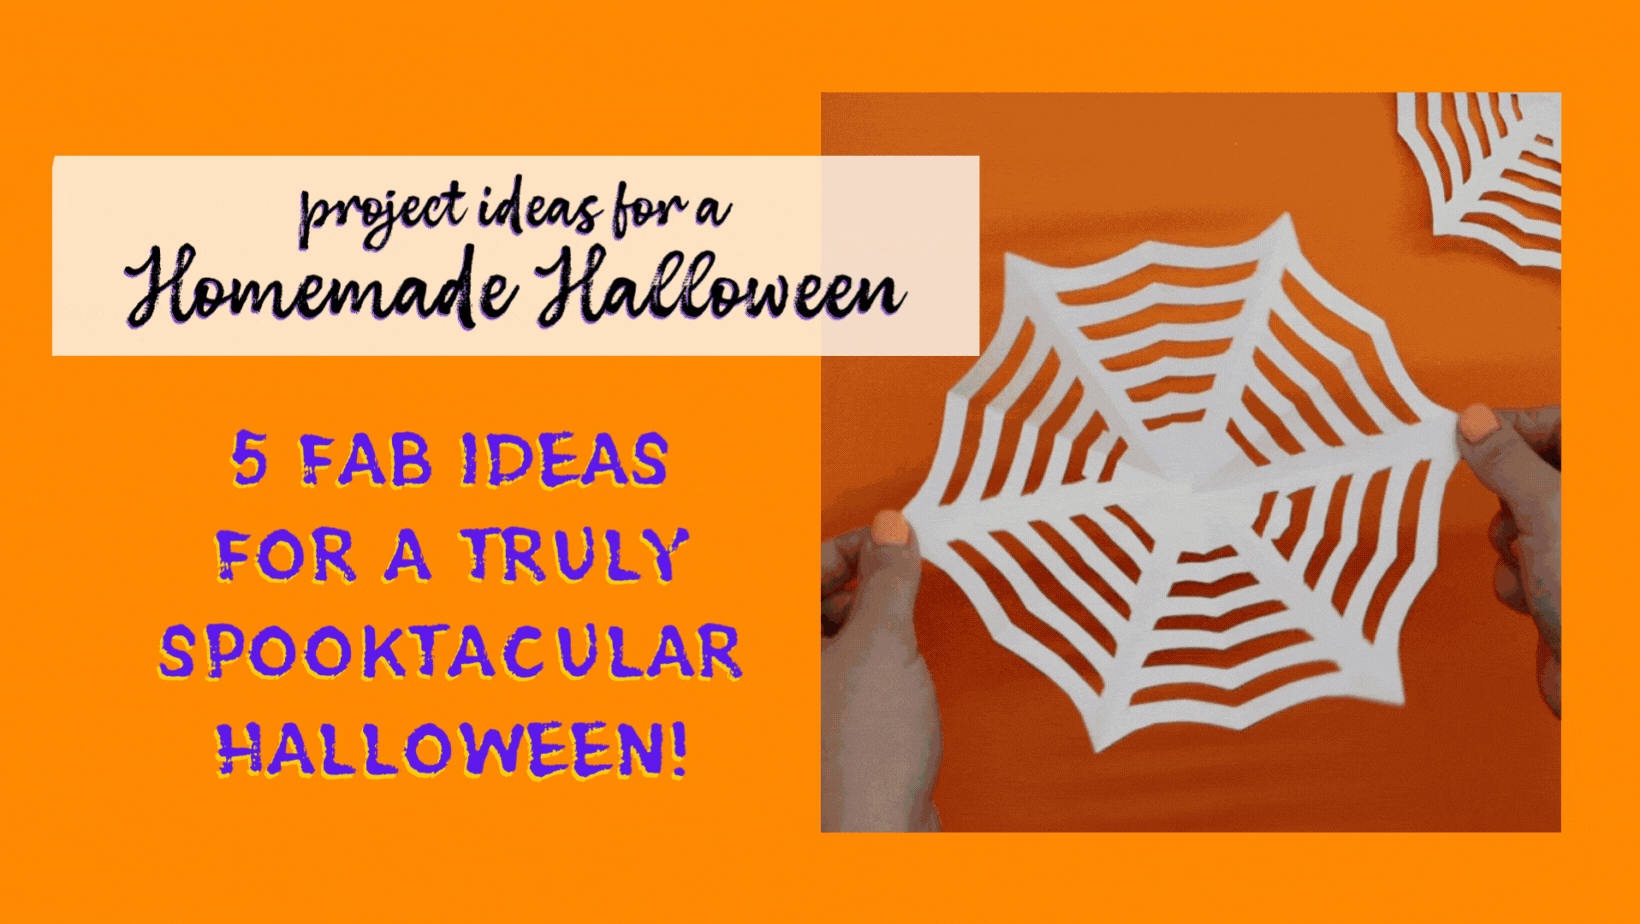 Homemade Halloween - craft ideas for kids & adults for a handmade spooky season!